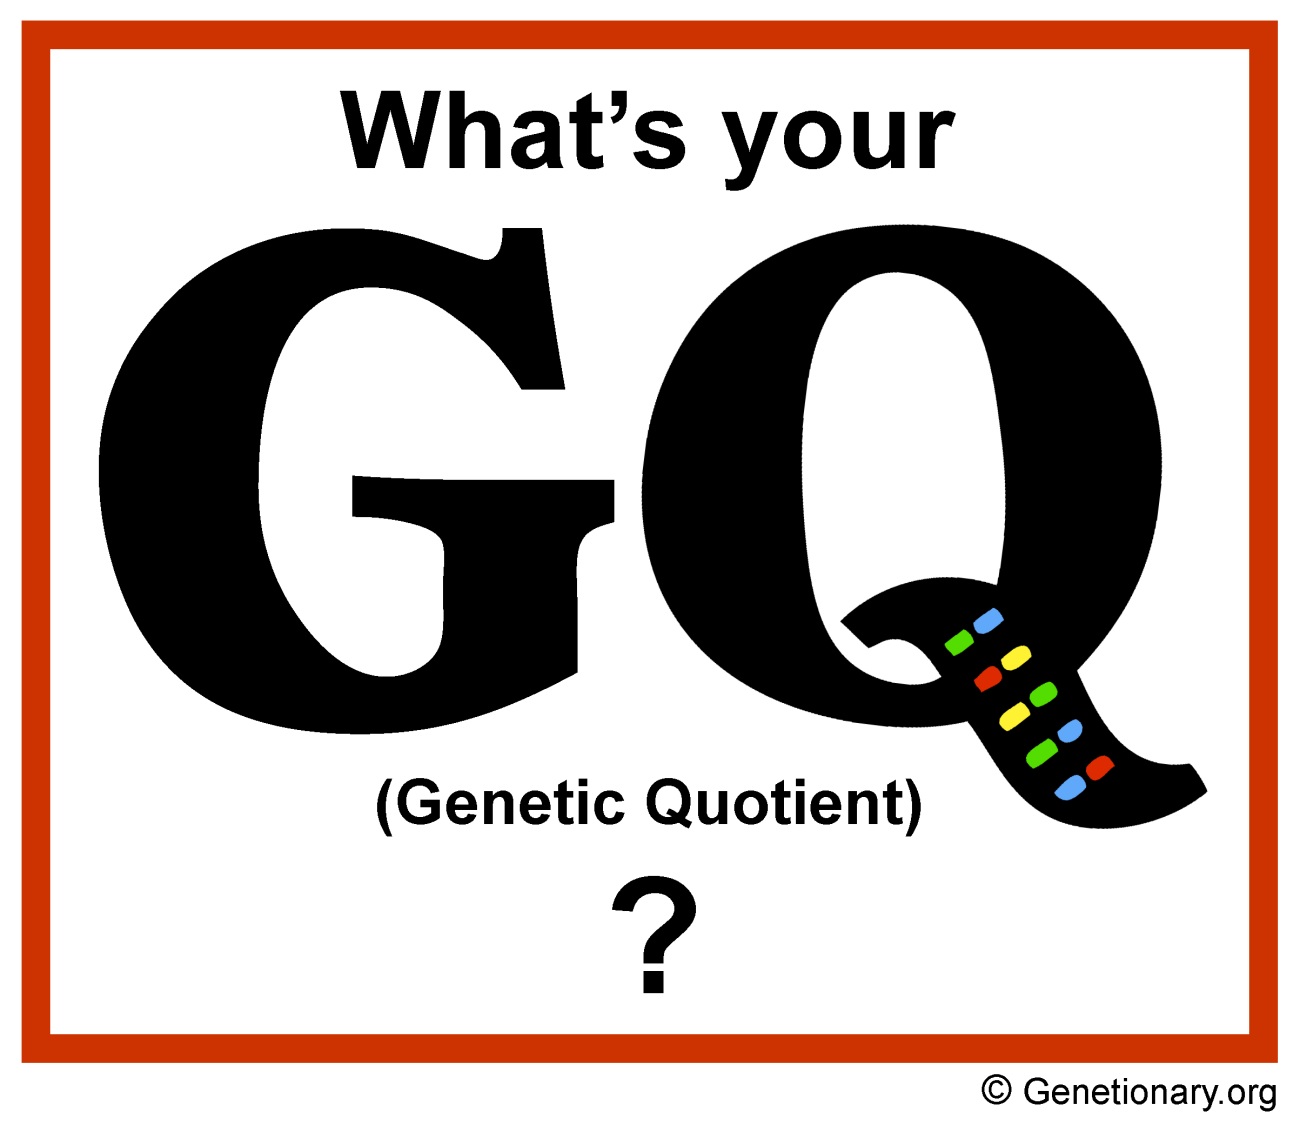 What is your Genetic Quotient?